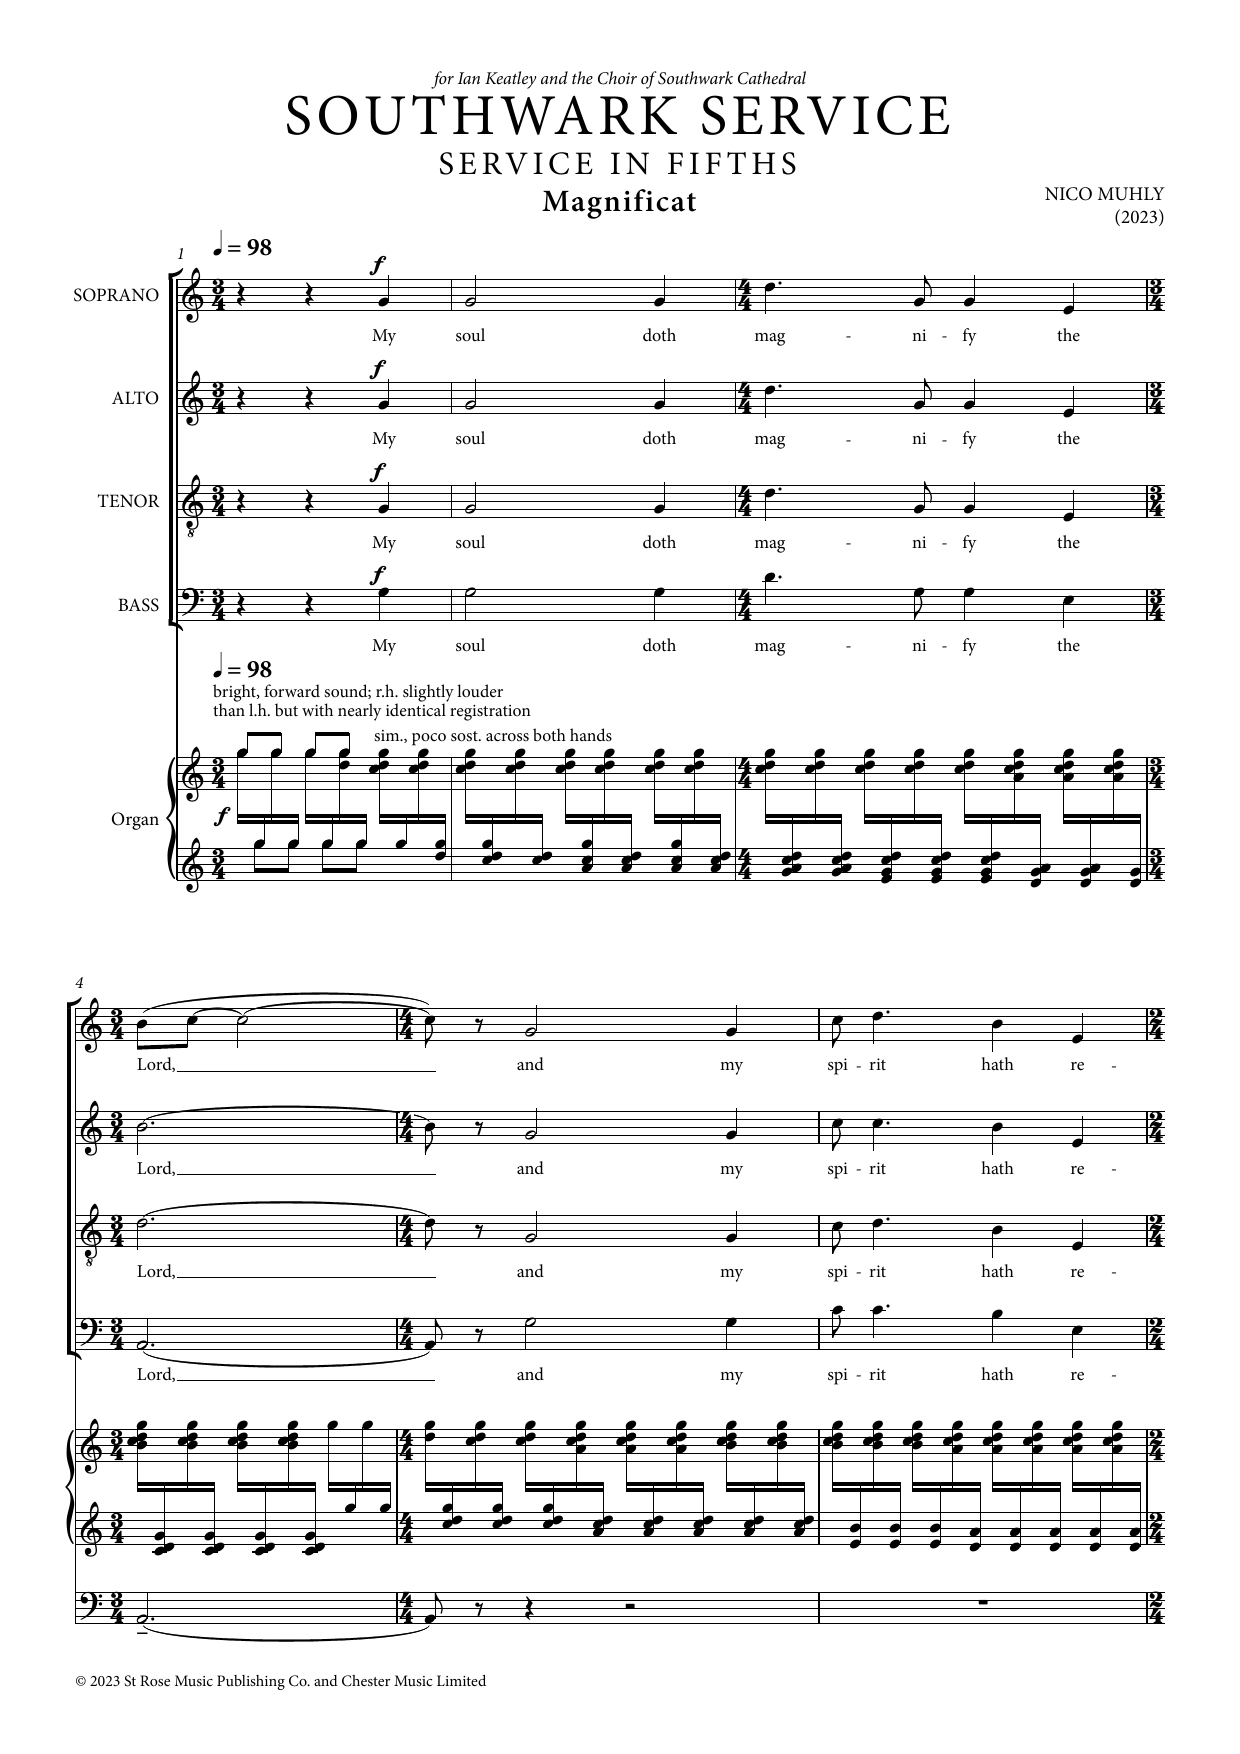 Nico Muhly Southwark Service sheet music notes printable PDF score